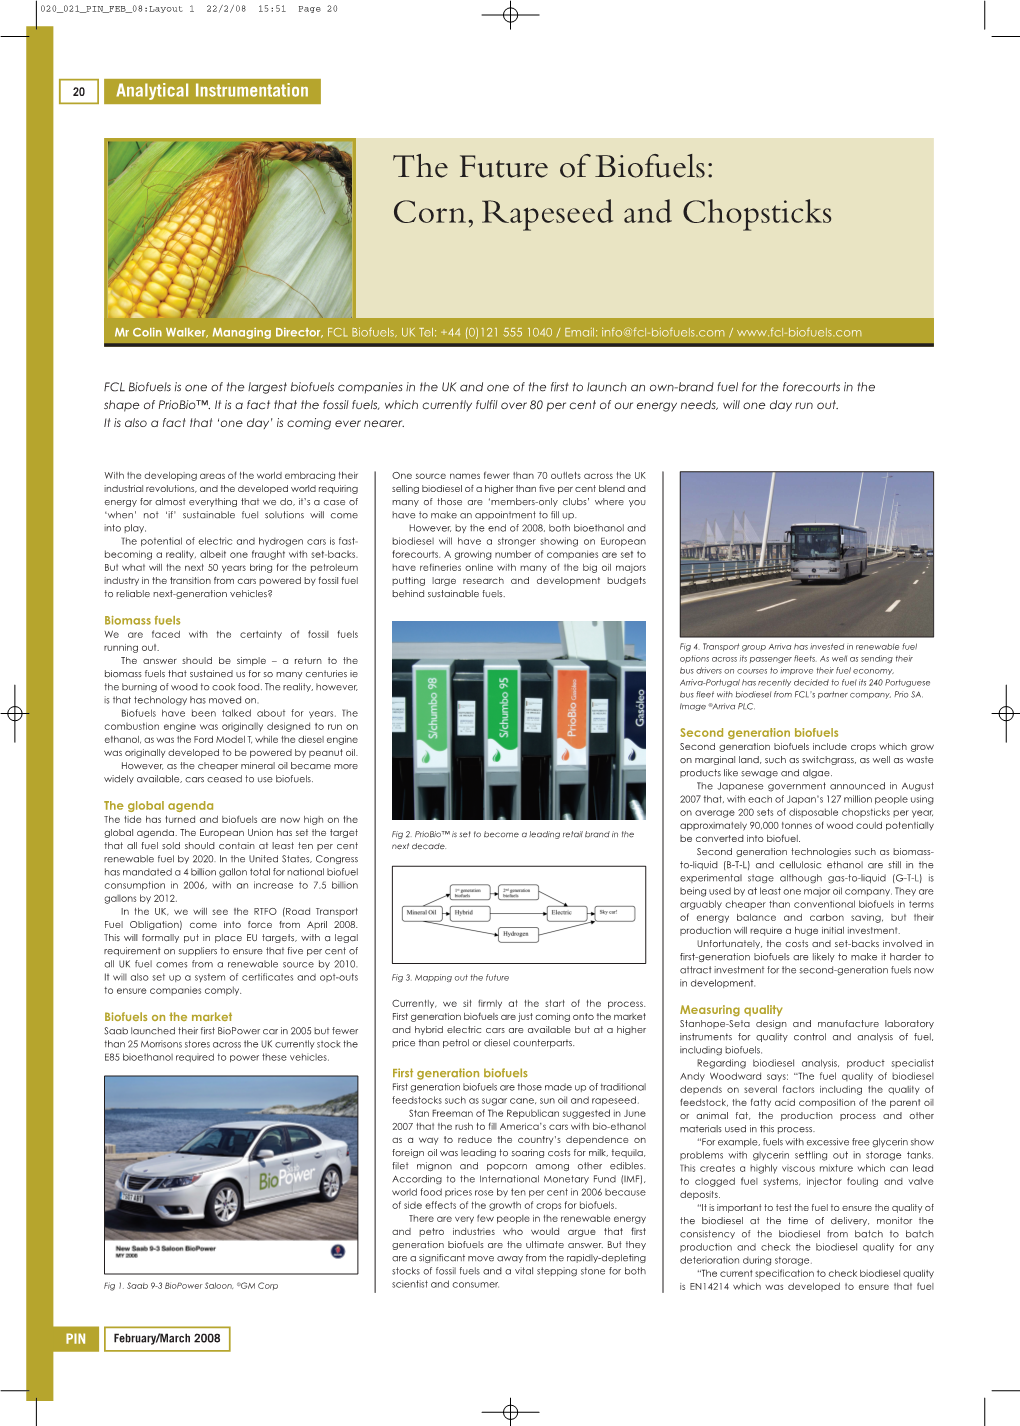 The Future of Biofuels: Corn, Rapeseed and Chopsticks